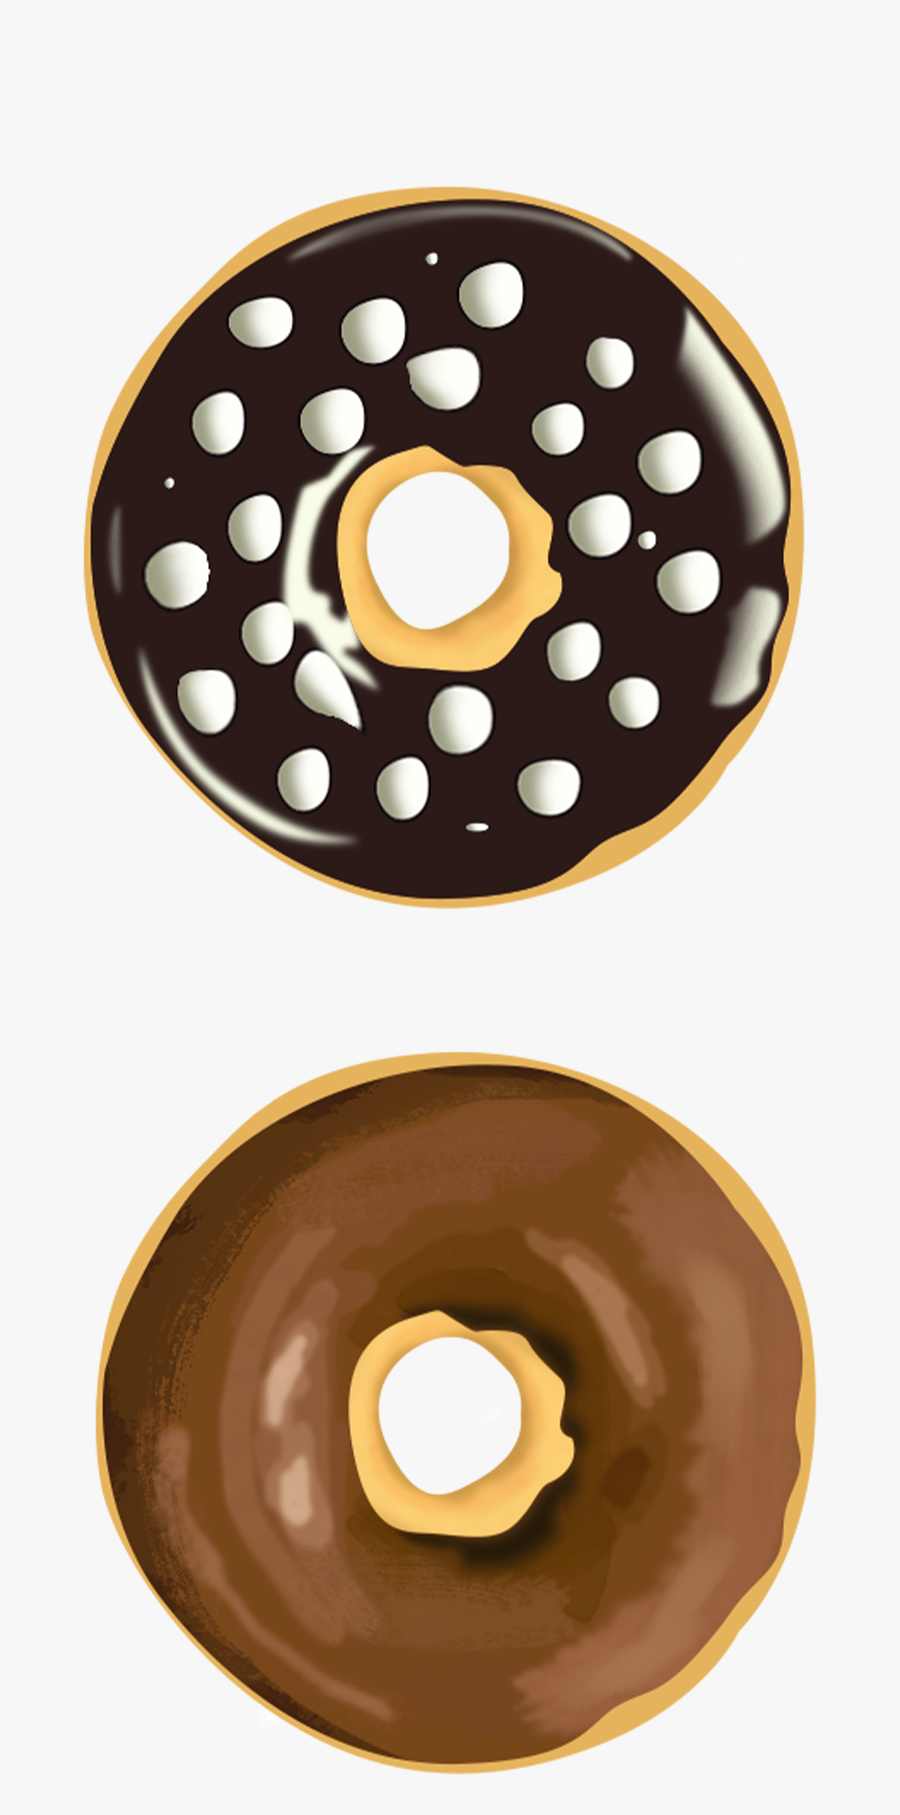 Donut Clipart Png - Portable Network Graphics, Transparent Clipart